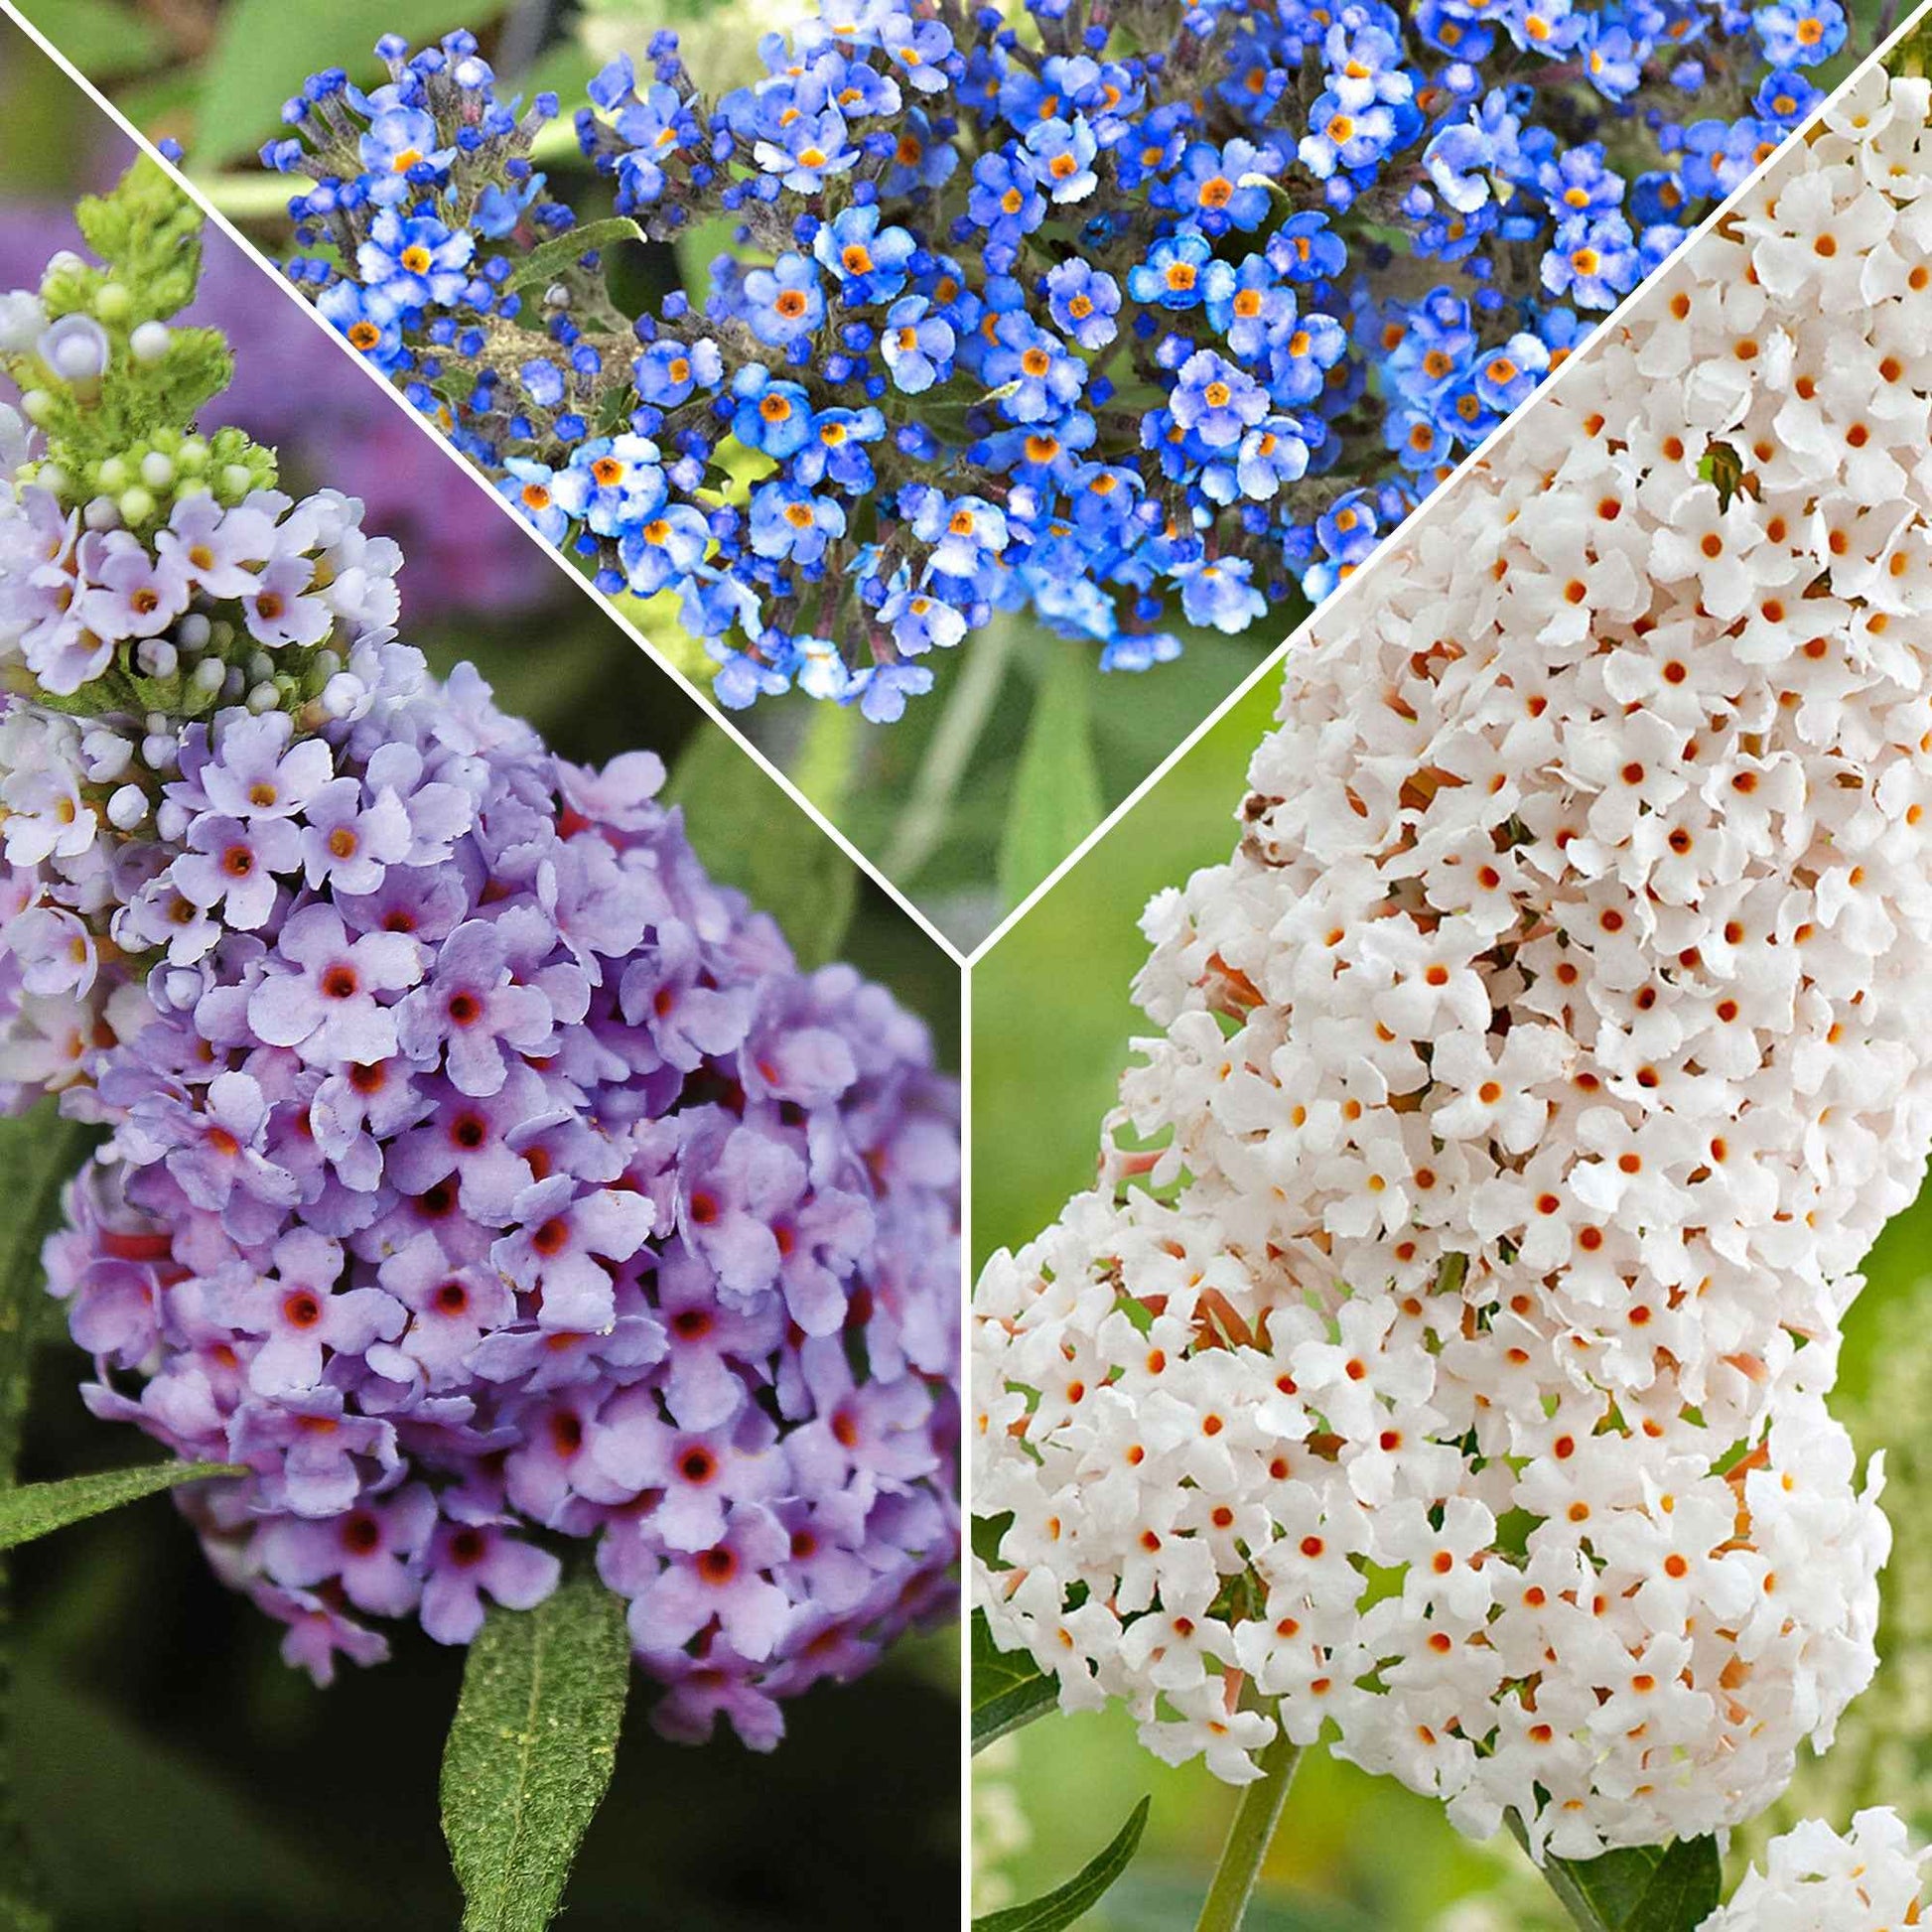 3x Arbre à papillons Buddleja 'Lilac Turtle' + 'White Swan' + 'Blue Sarah' bleu-violet-blanc - Arbre à papillons - Buddleja